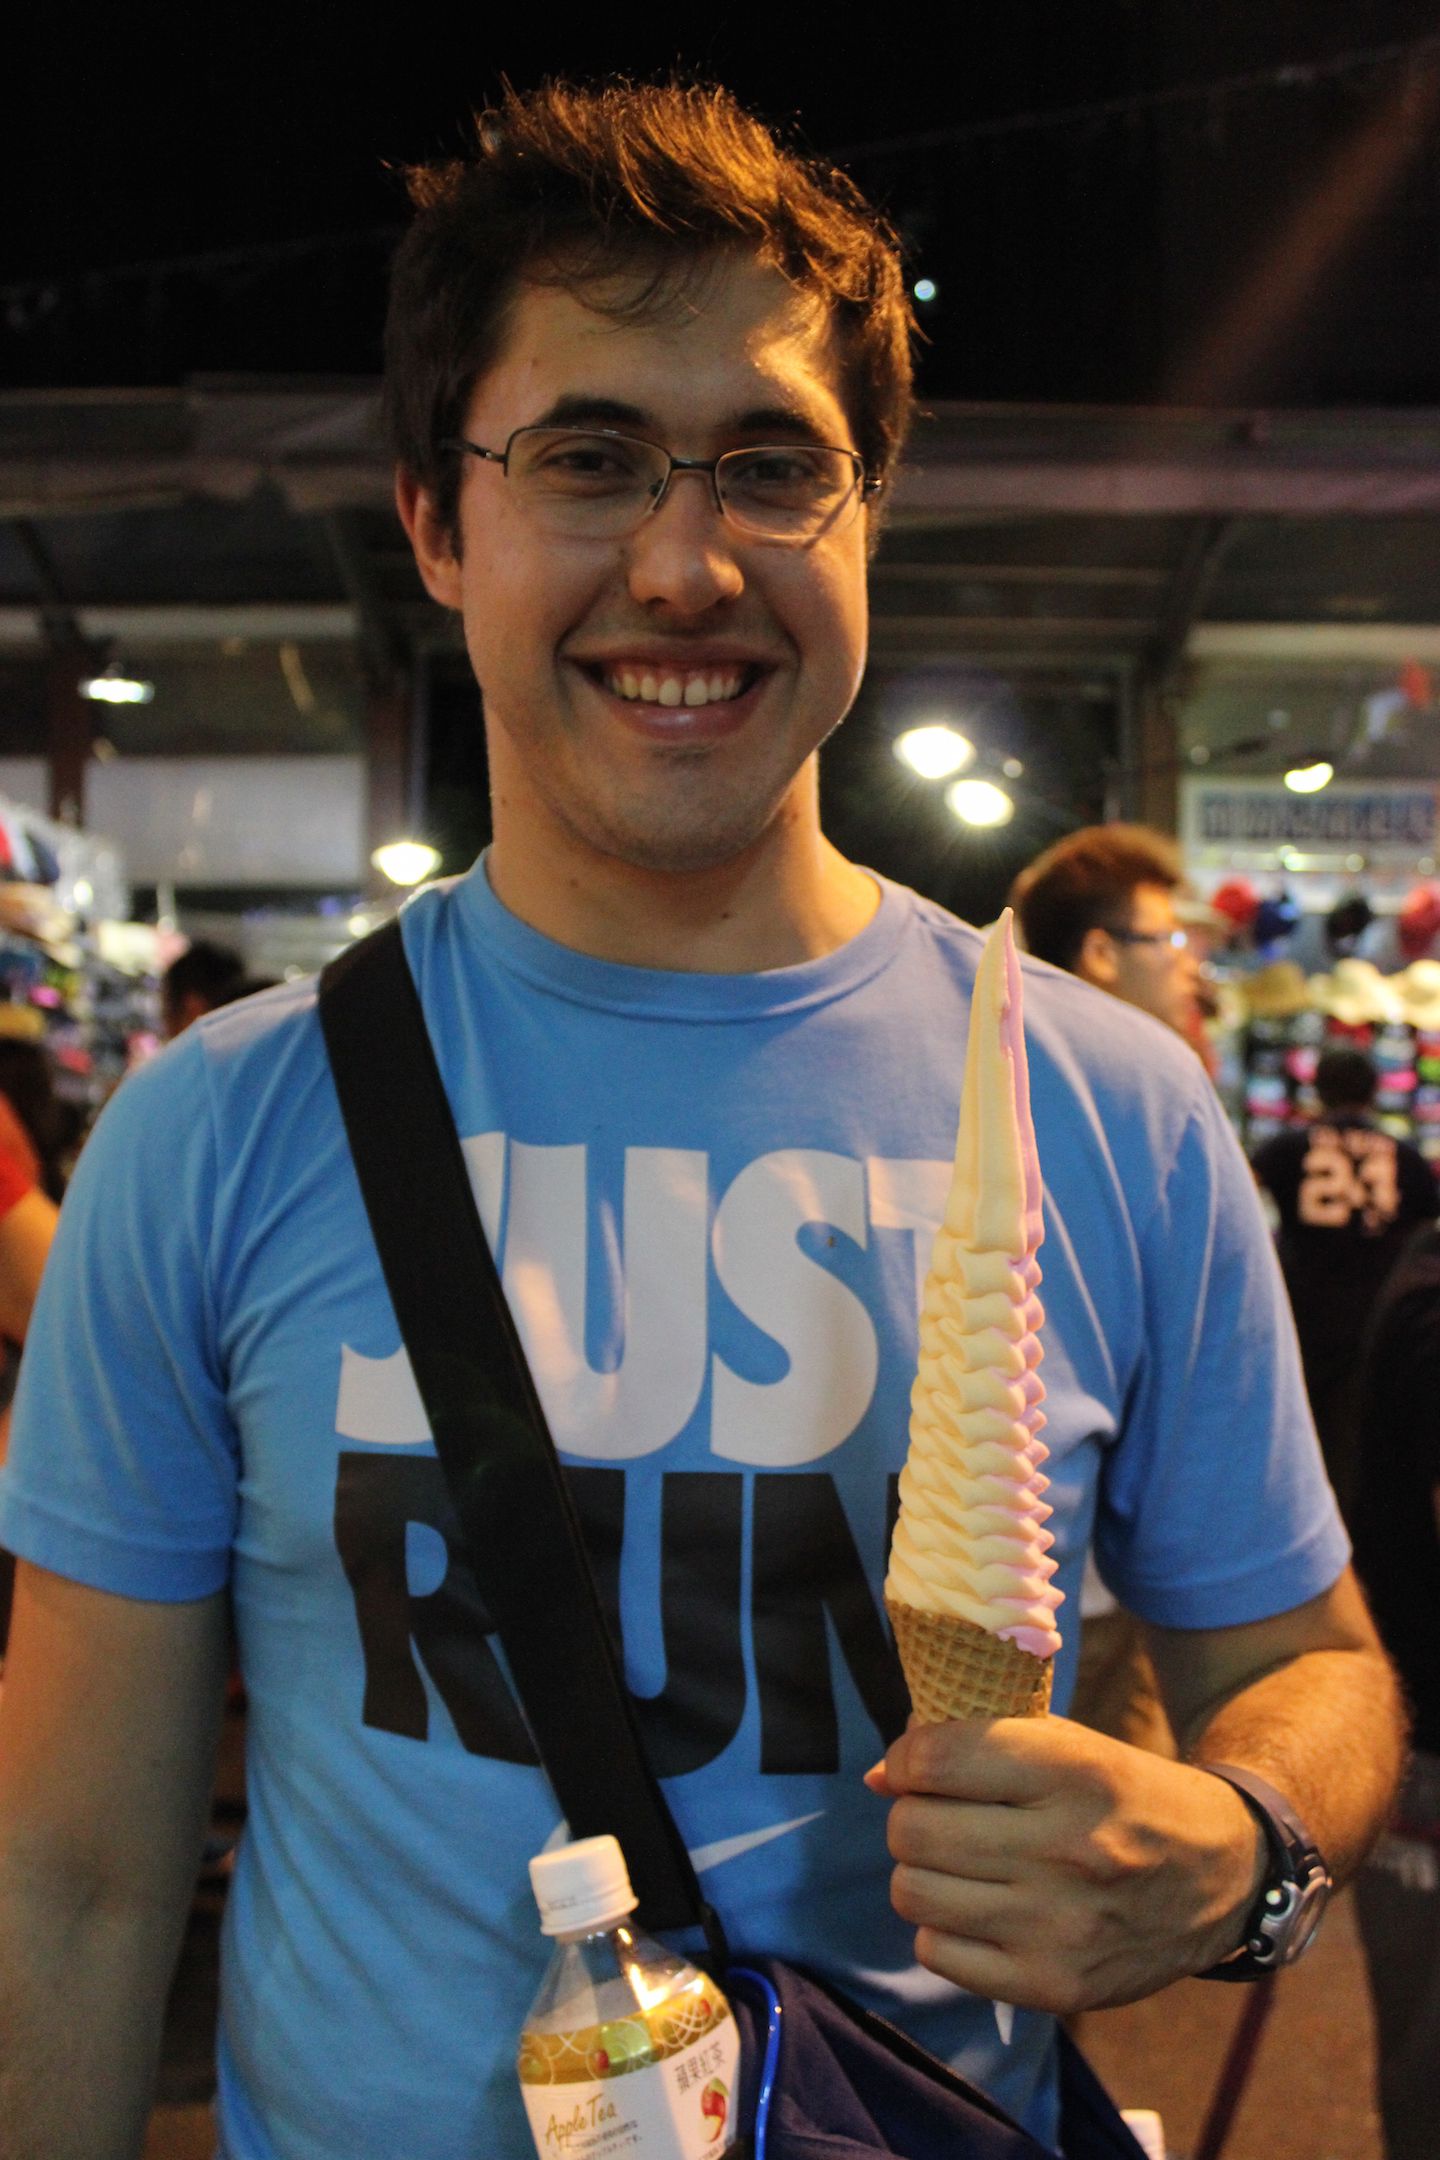 Long ice cream cone